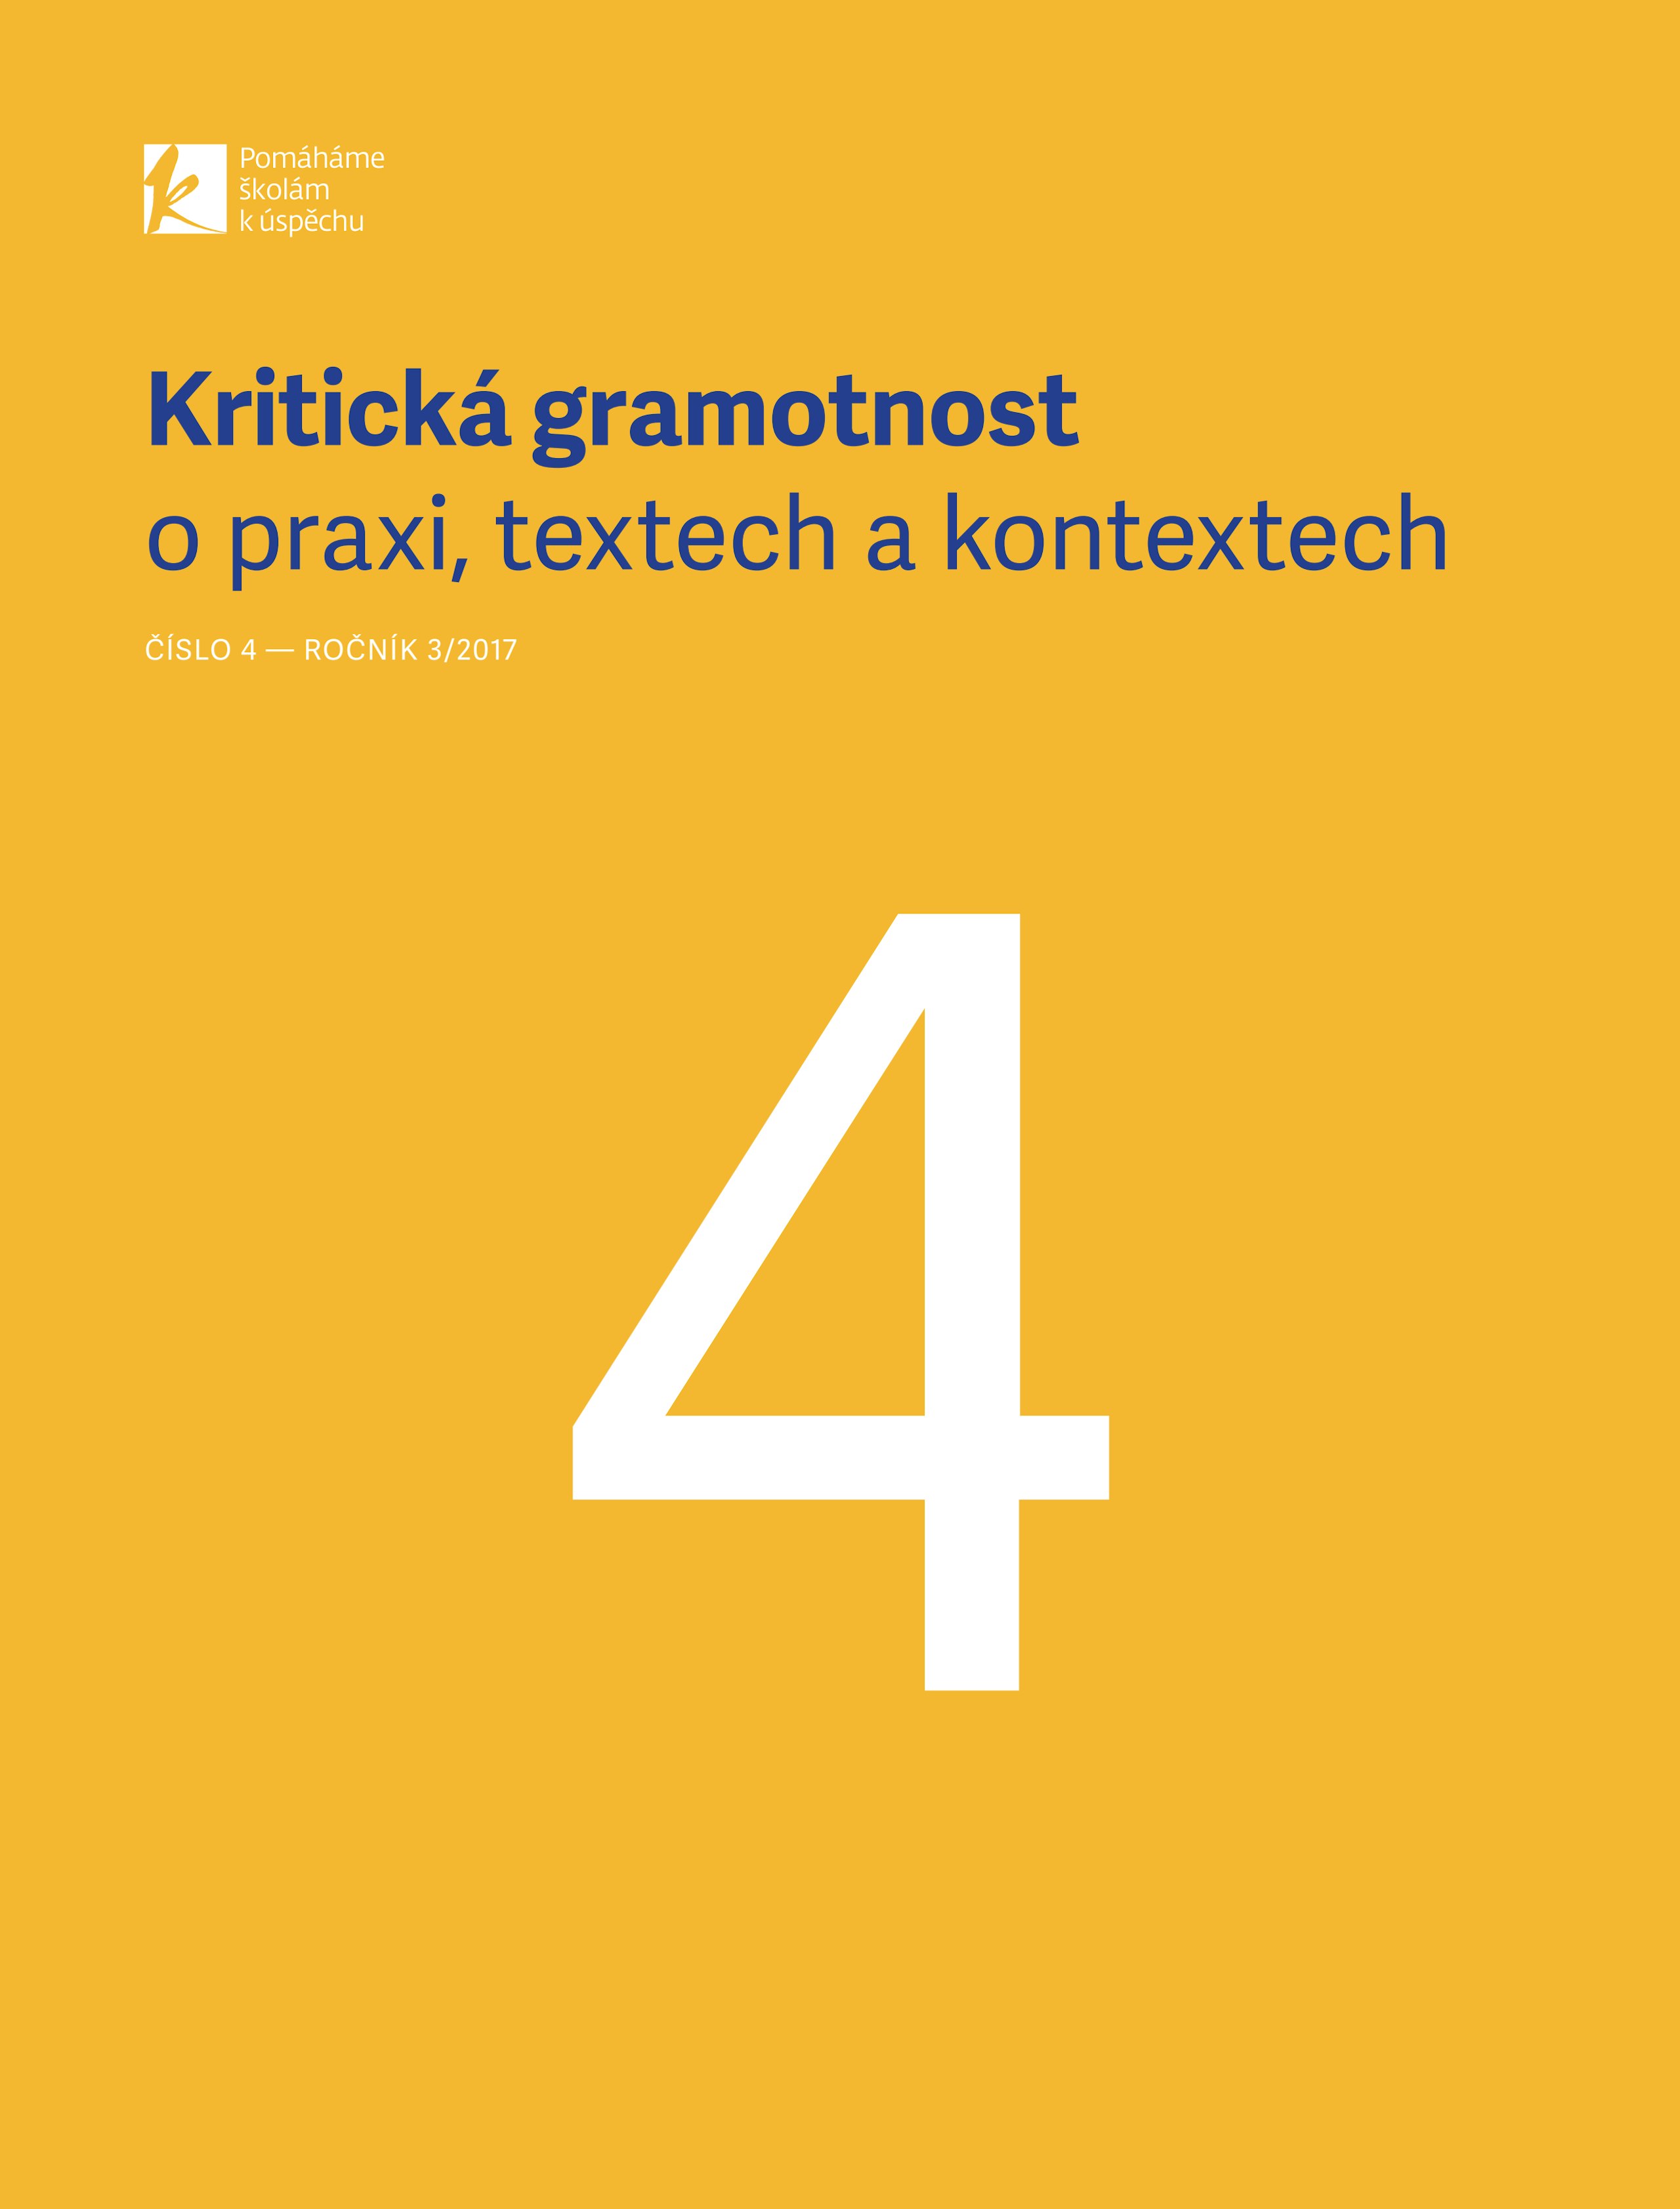 kriticka-gramotnost-4-3-2017-final.pdf